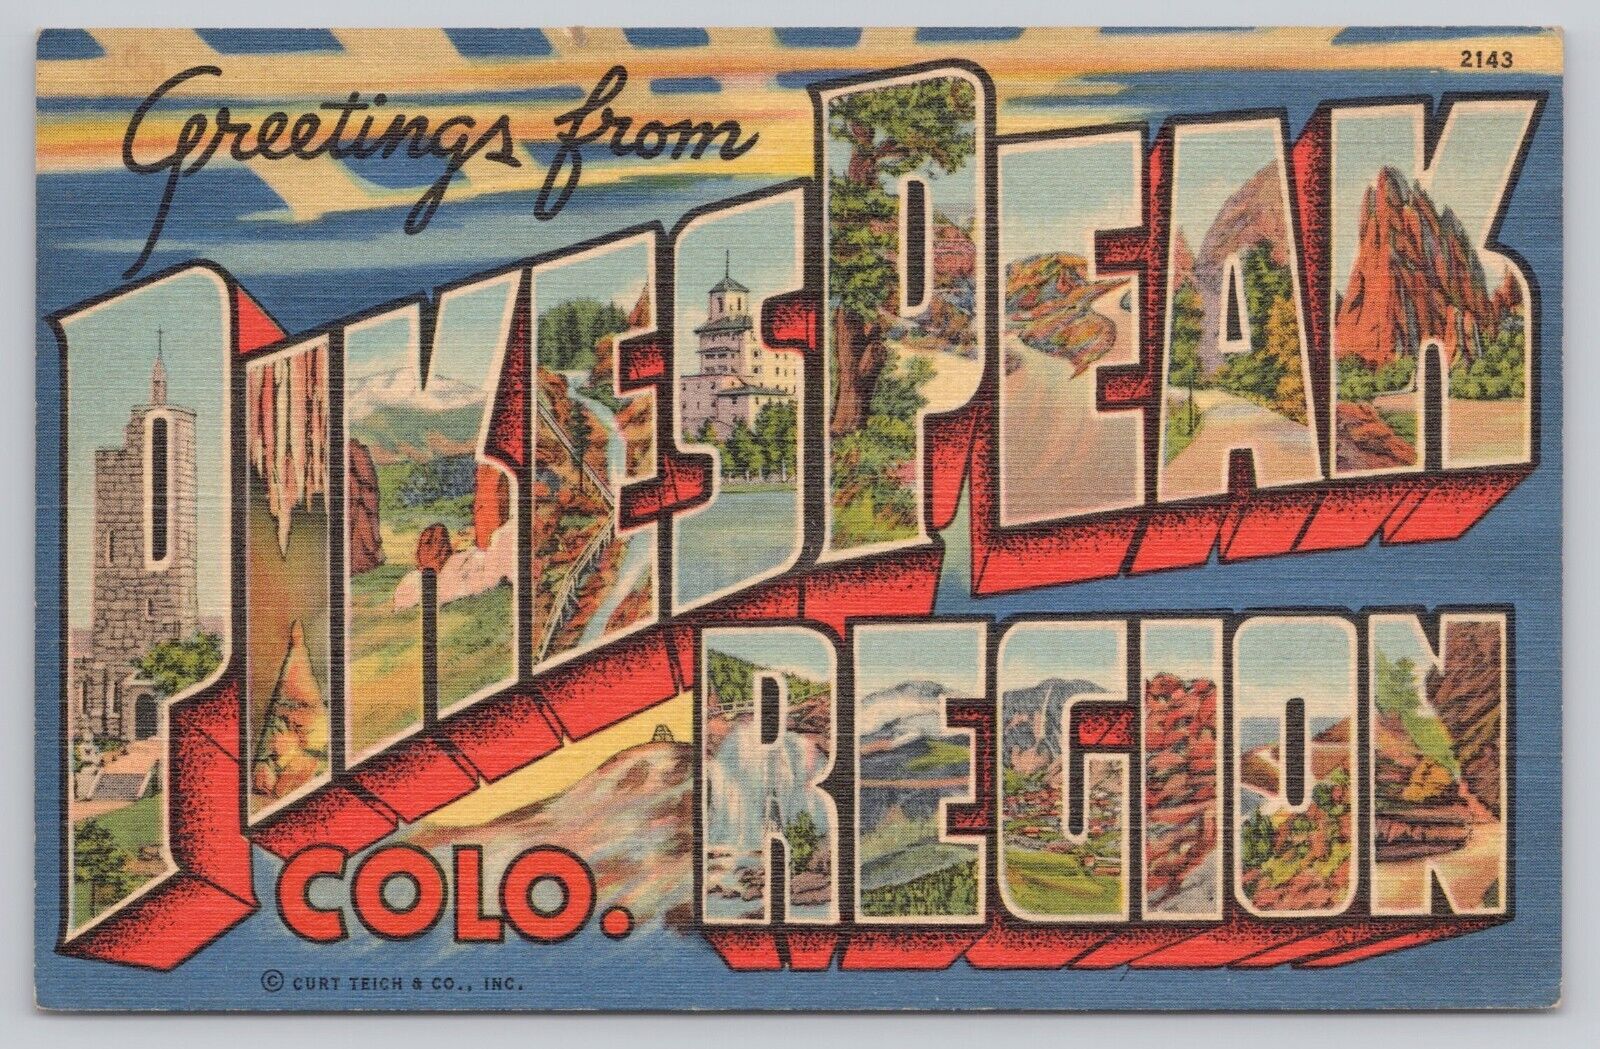 Pikes Peak Region Colorado, Large Letter Greetings, Vintage Postcard